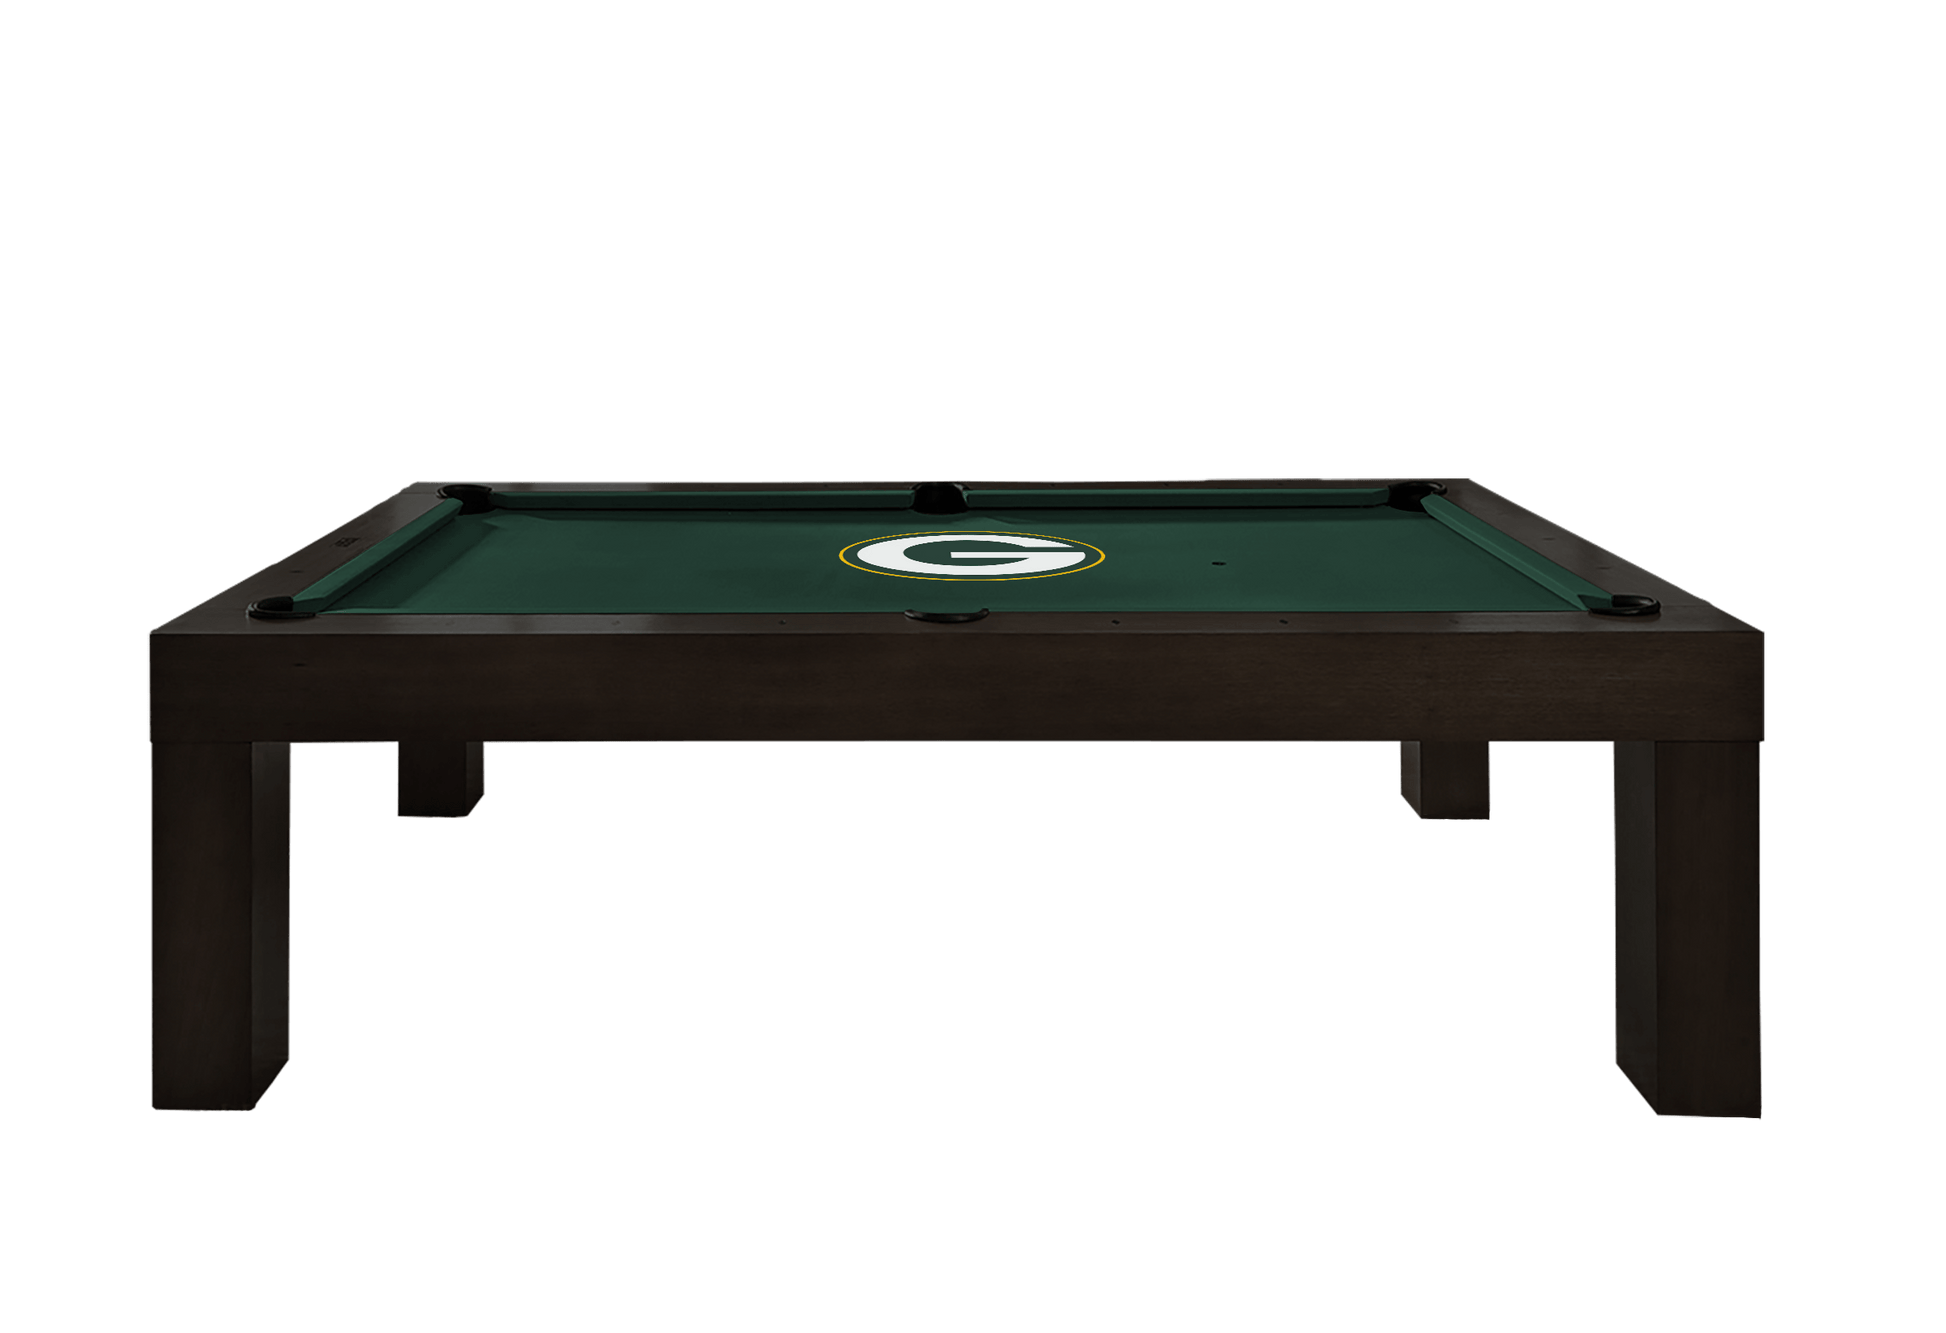 Green Bay Packers Premium Pool Table Bundle - Black Ash Pool Bundle Home Arcade Games   